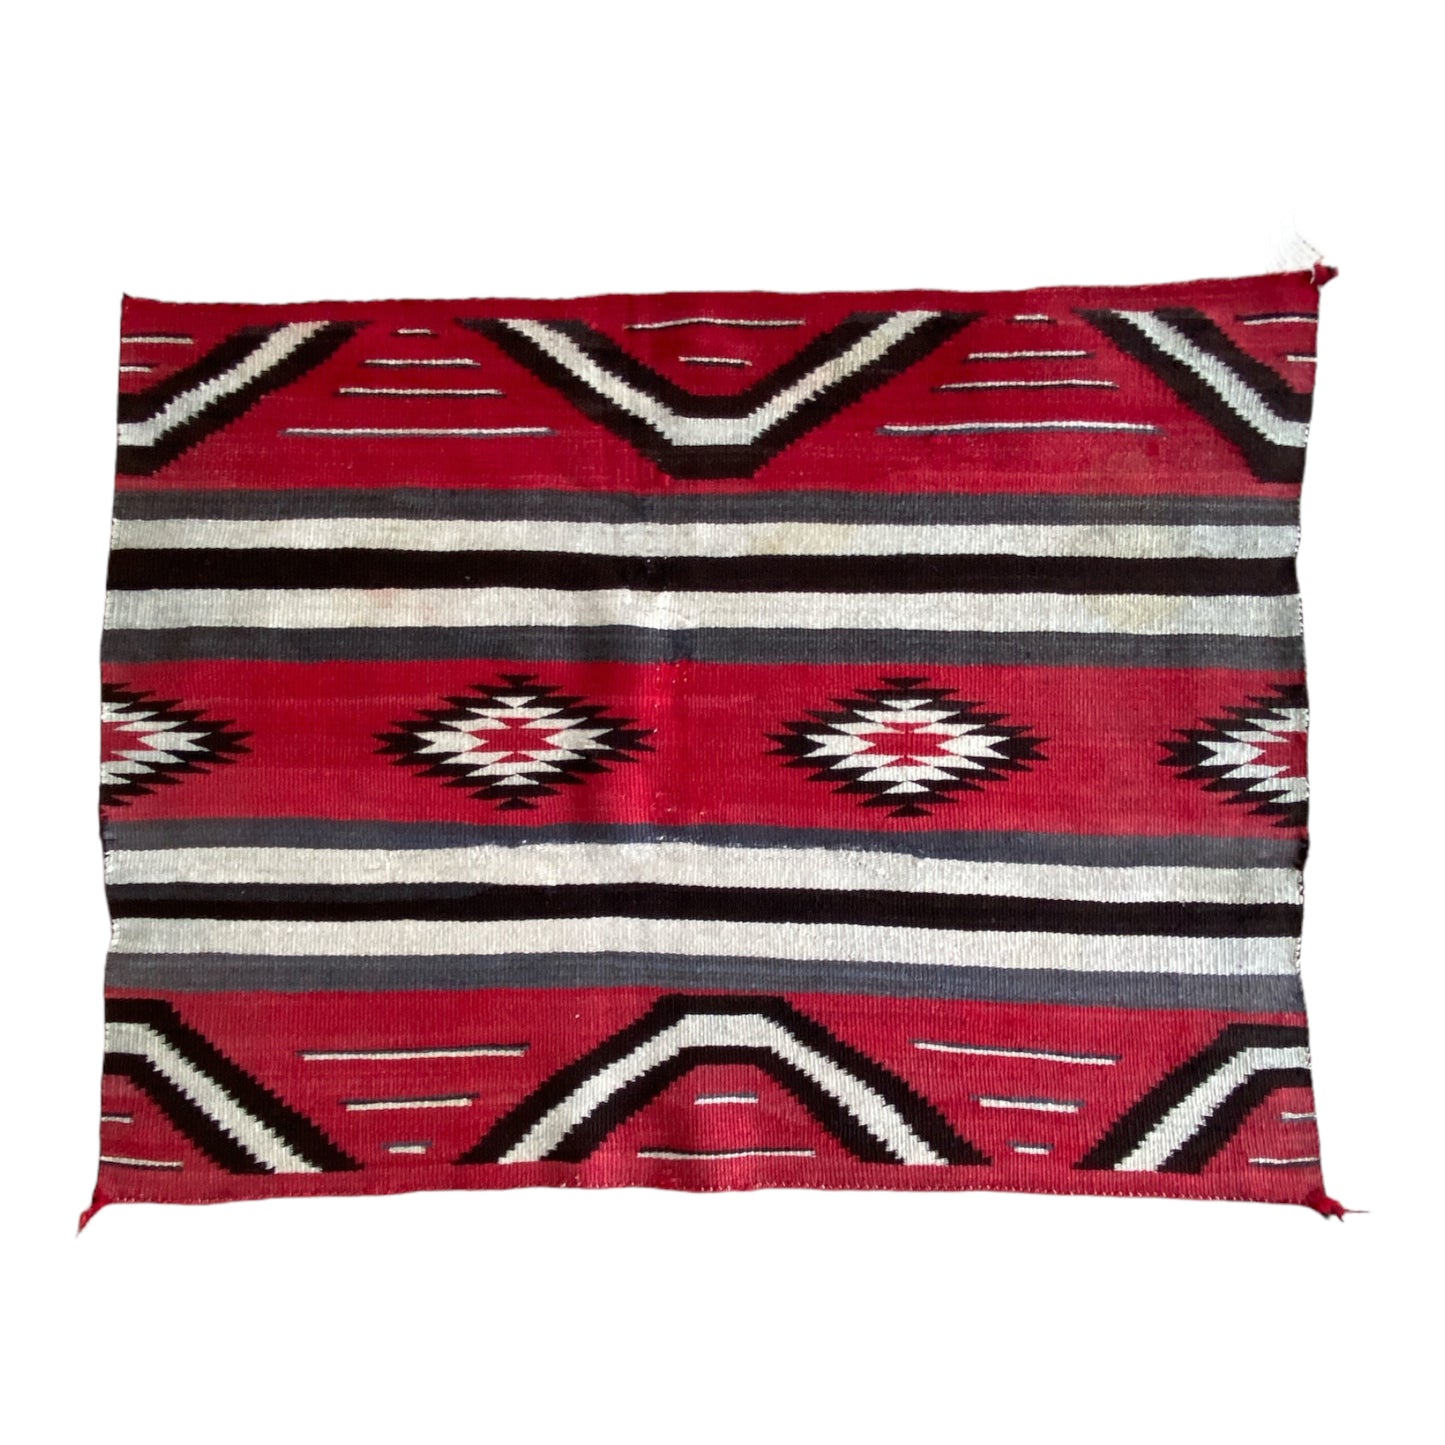 antique navajo chiefs blanket for sale, navajo weaving for sale telluride gallery, navajo rug for sale